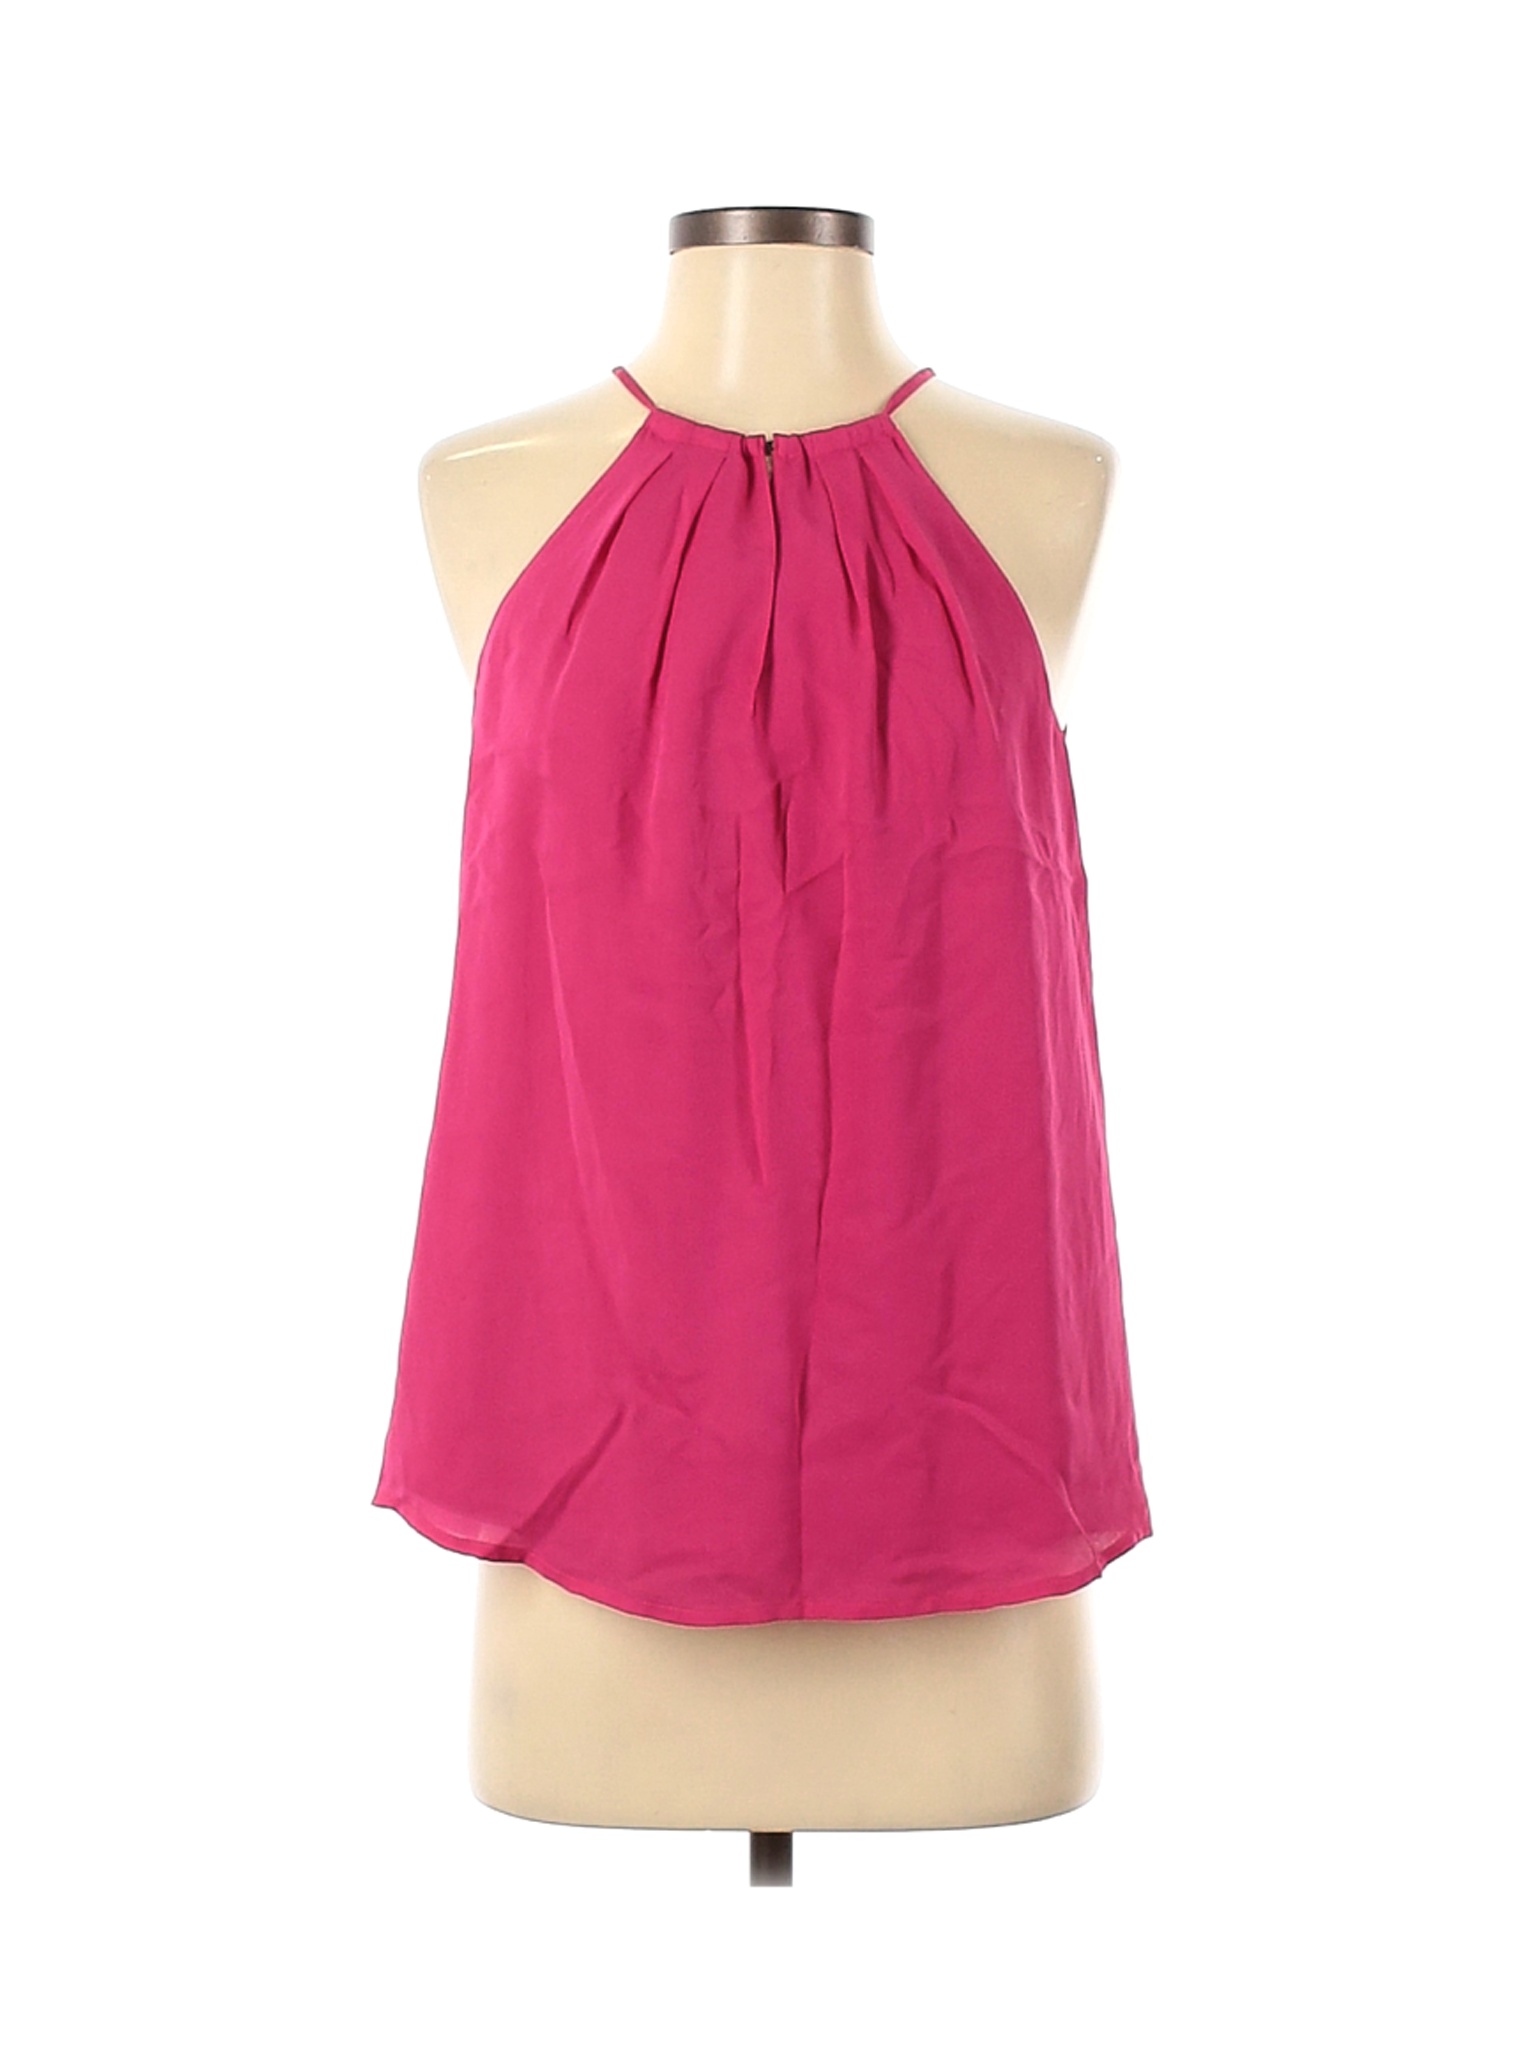 Joie Women Pink Sleeveless Silk Top XS | eBay